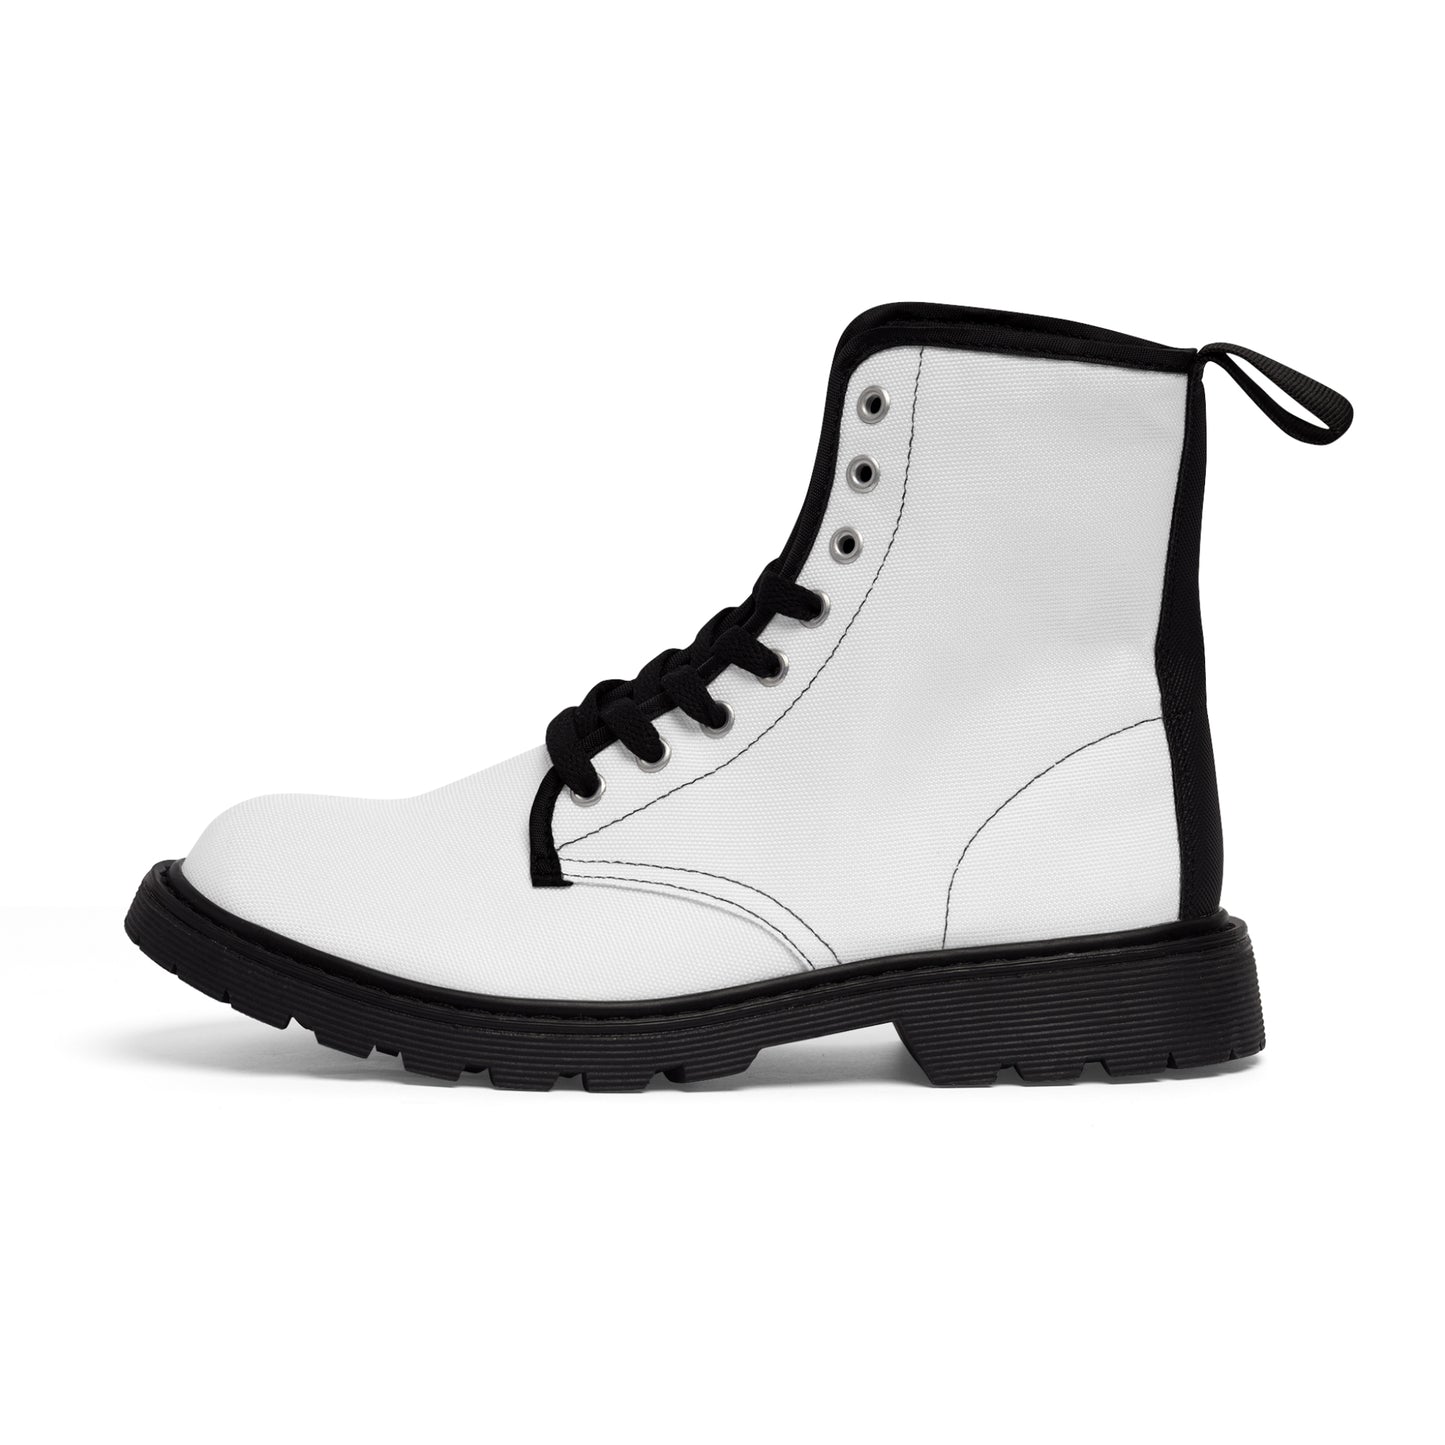 Women's Canvas Boots - Template US 11 Black sole